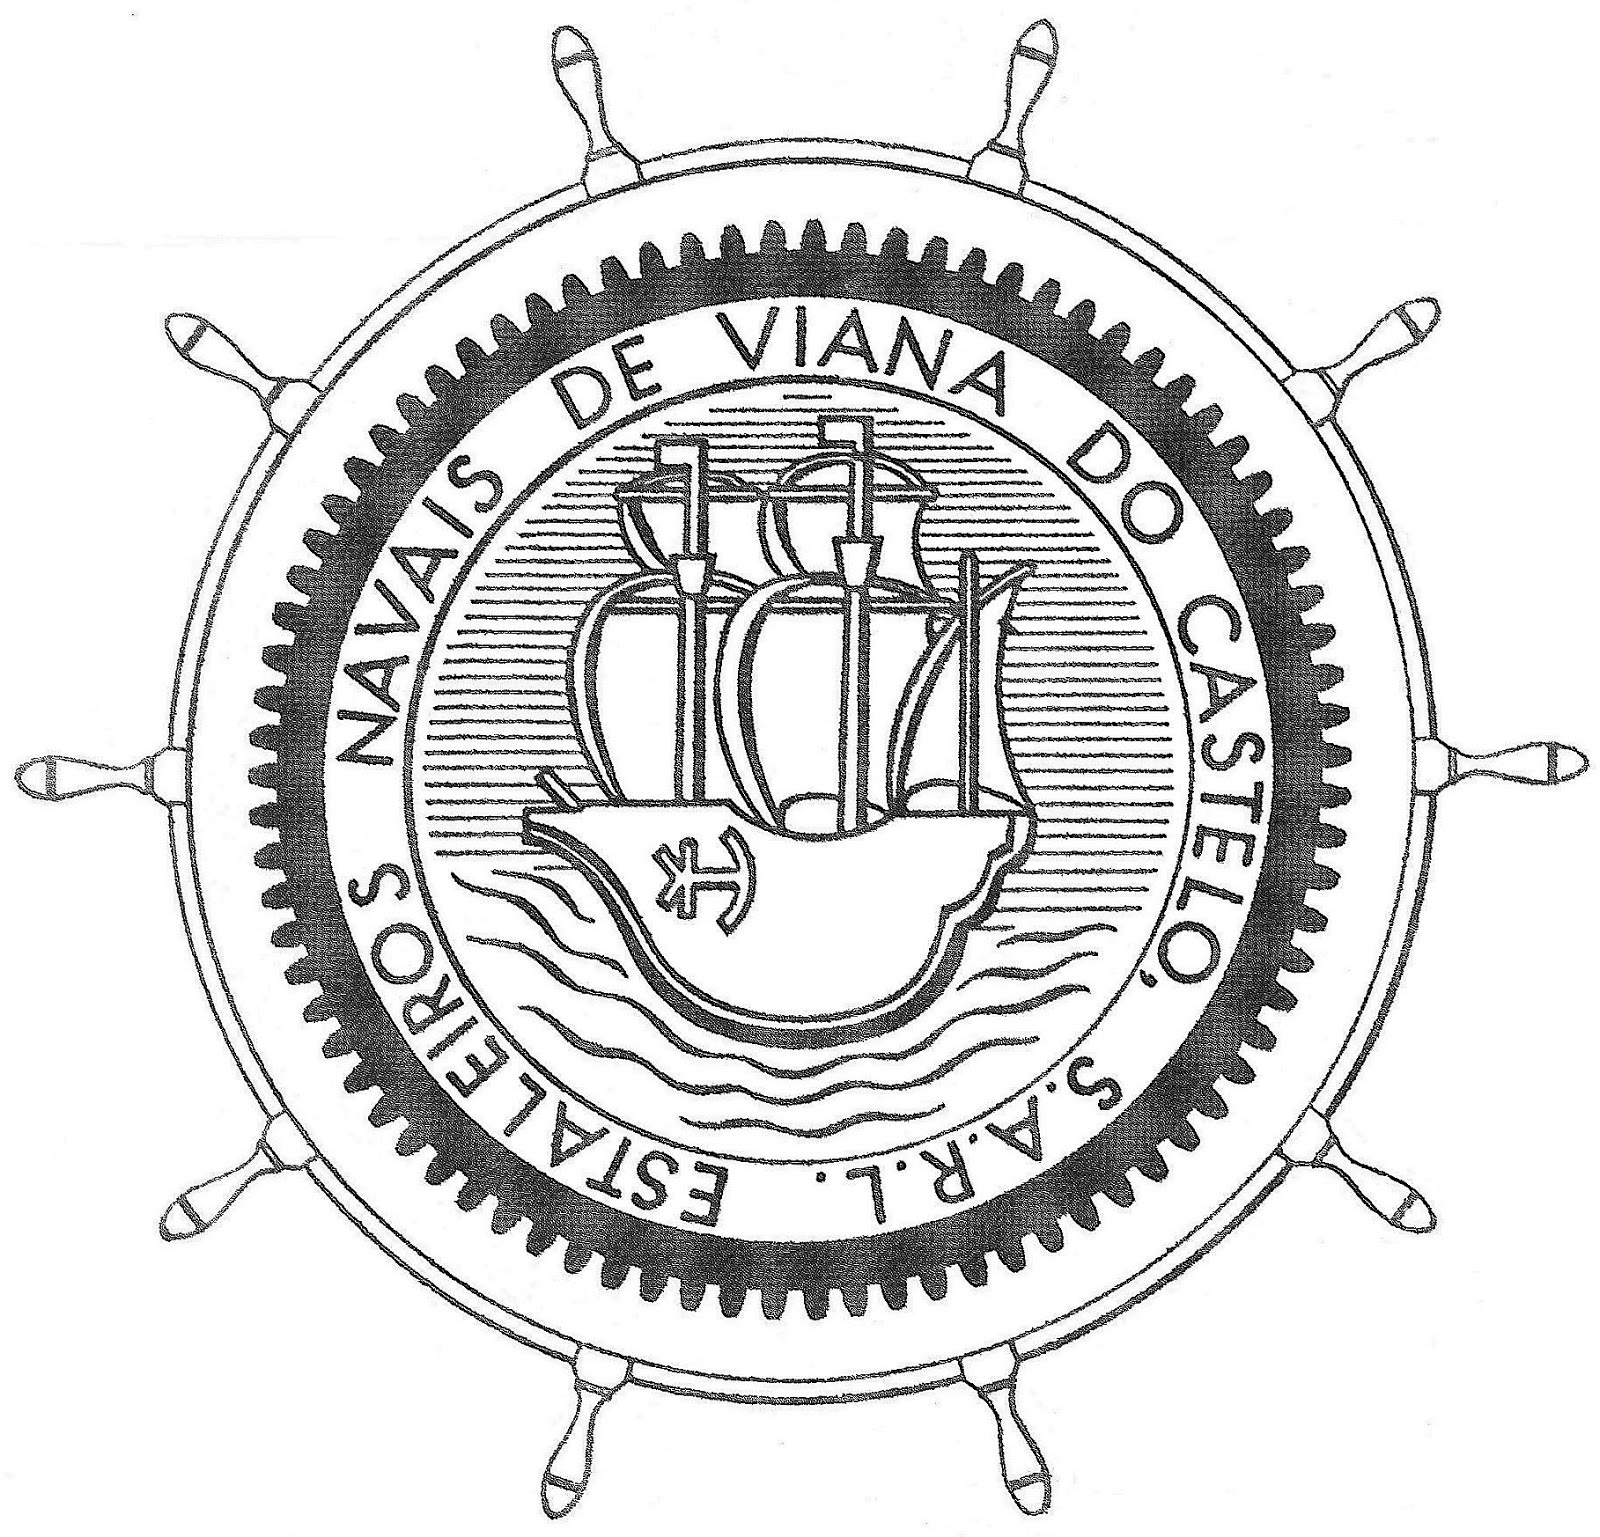 Simbolo dos Estaleiros Navais de Viana do Castelo